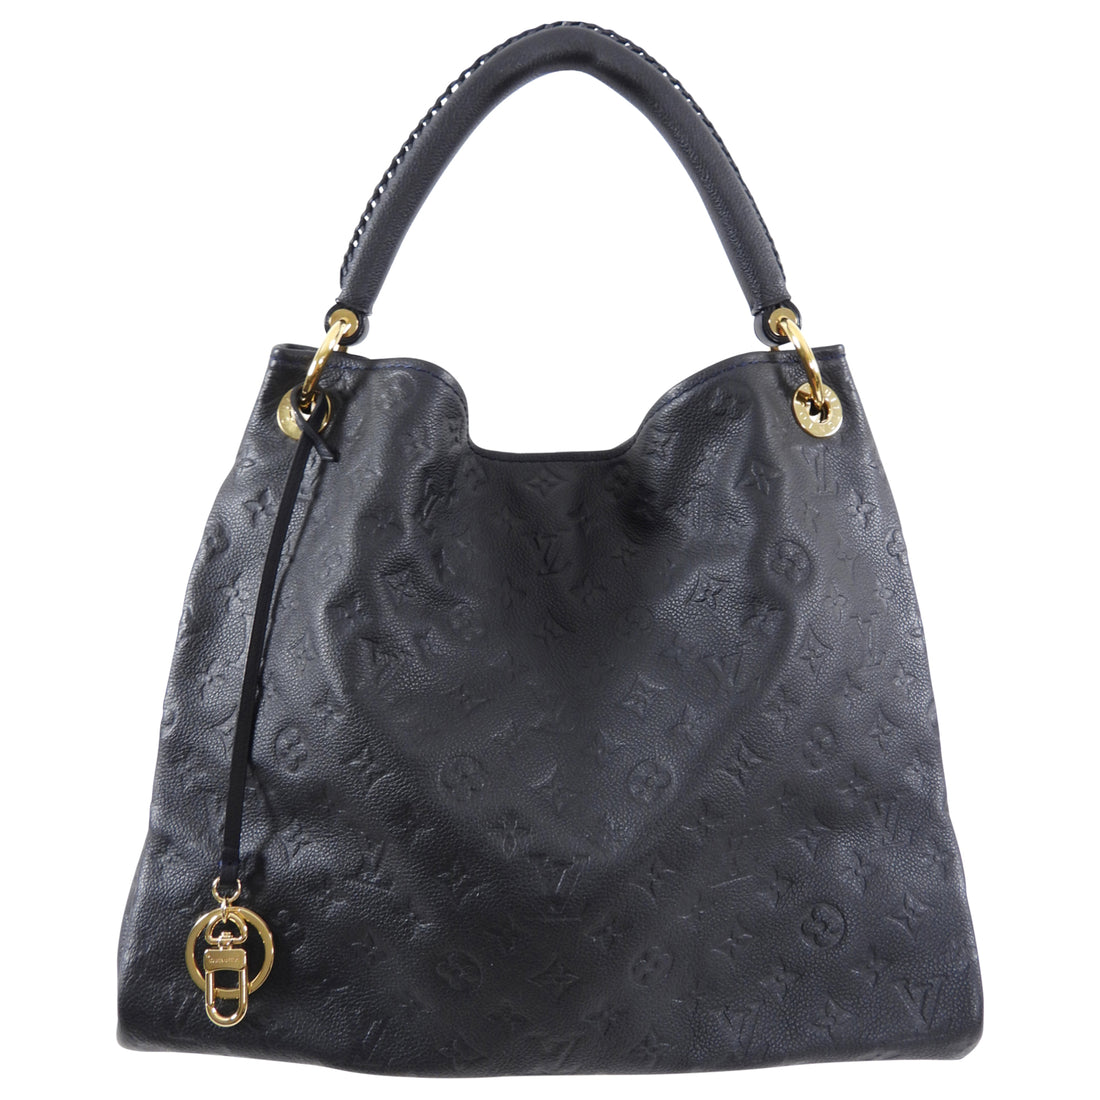 Louis Vuitton - Authenticated Artsy Handbag - Leather Black Plain for Women, Good Condition